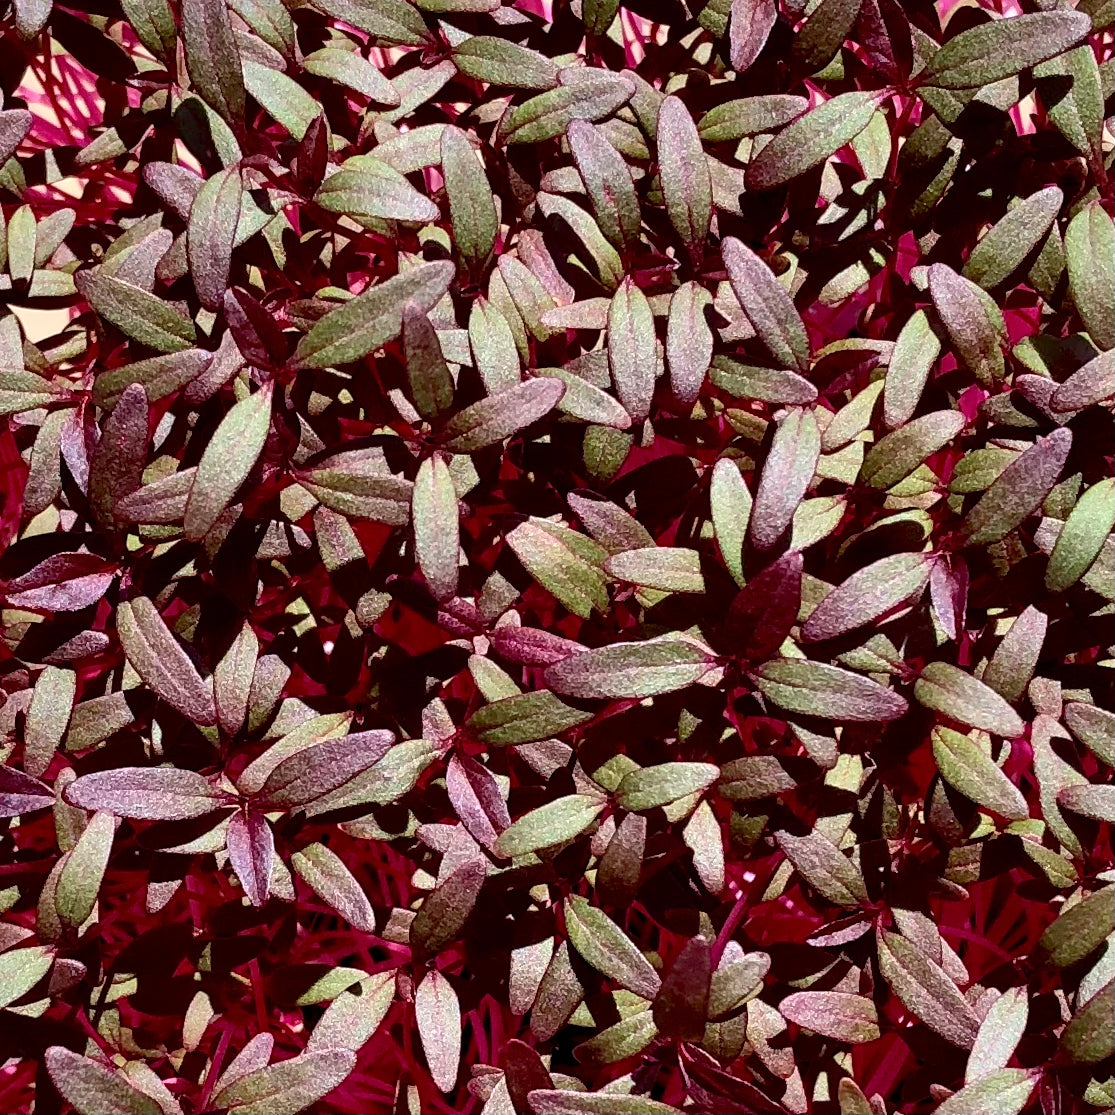 Amaranth microgreens have bright reddish pink stems with bright reddish pink and green leaves.